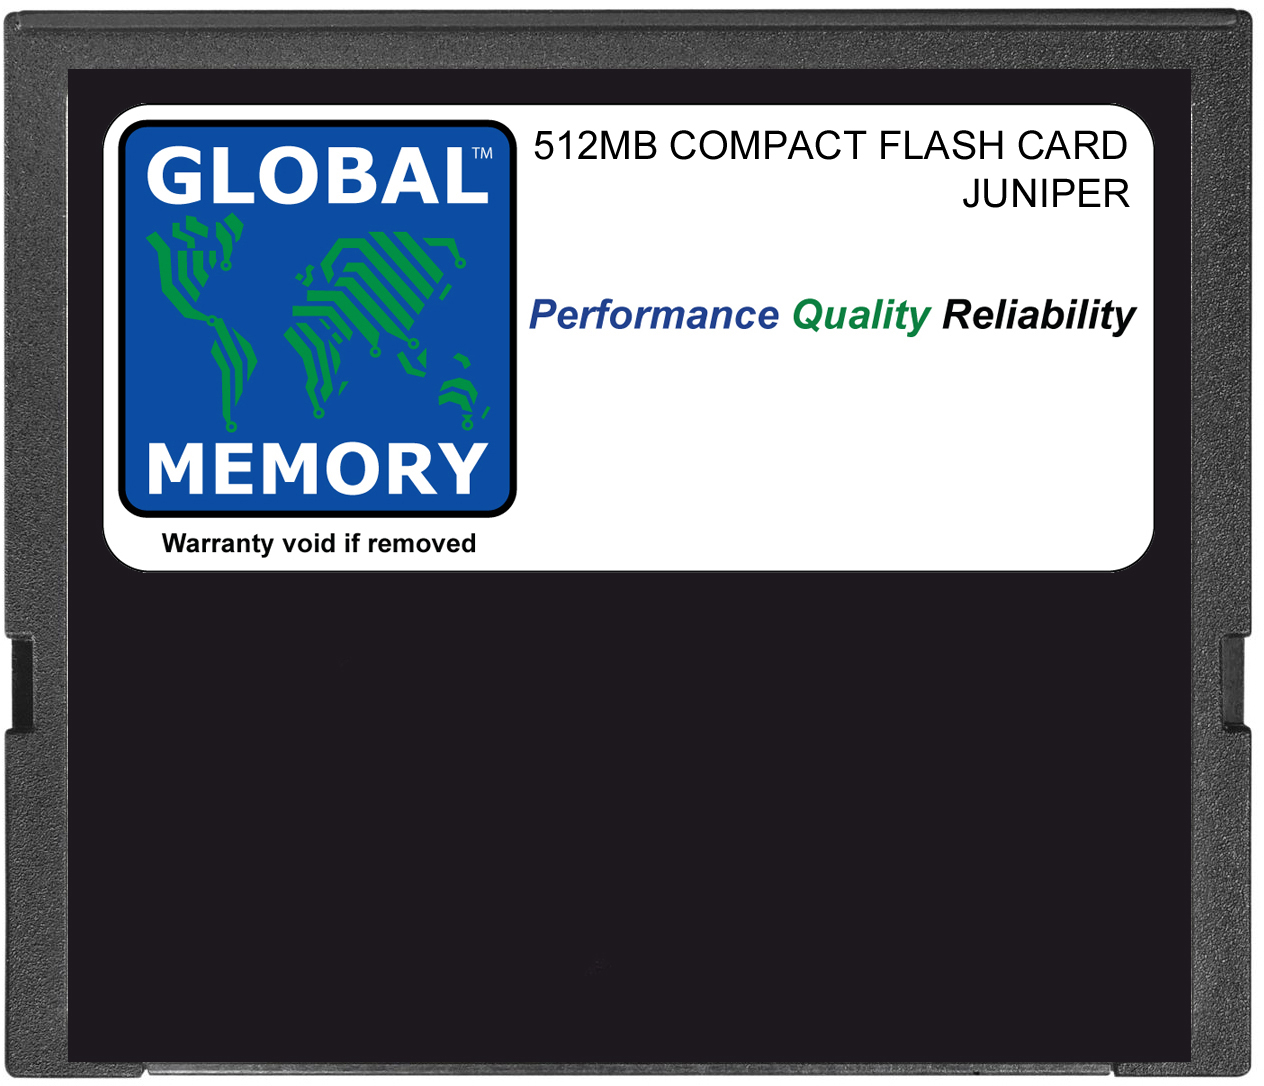 512MB COMPACT FLASH CARD MEMORY FOR JUNIPER J2300 / J4300 / J6300 SERIES ROUTERS (JX-CF-512M-S)